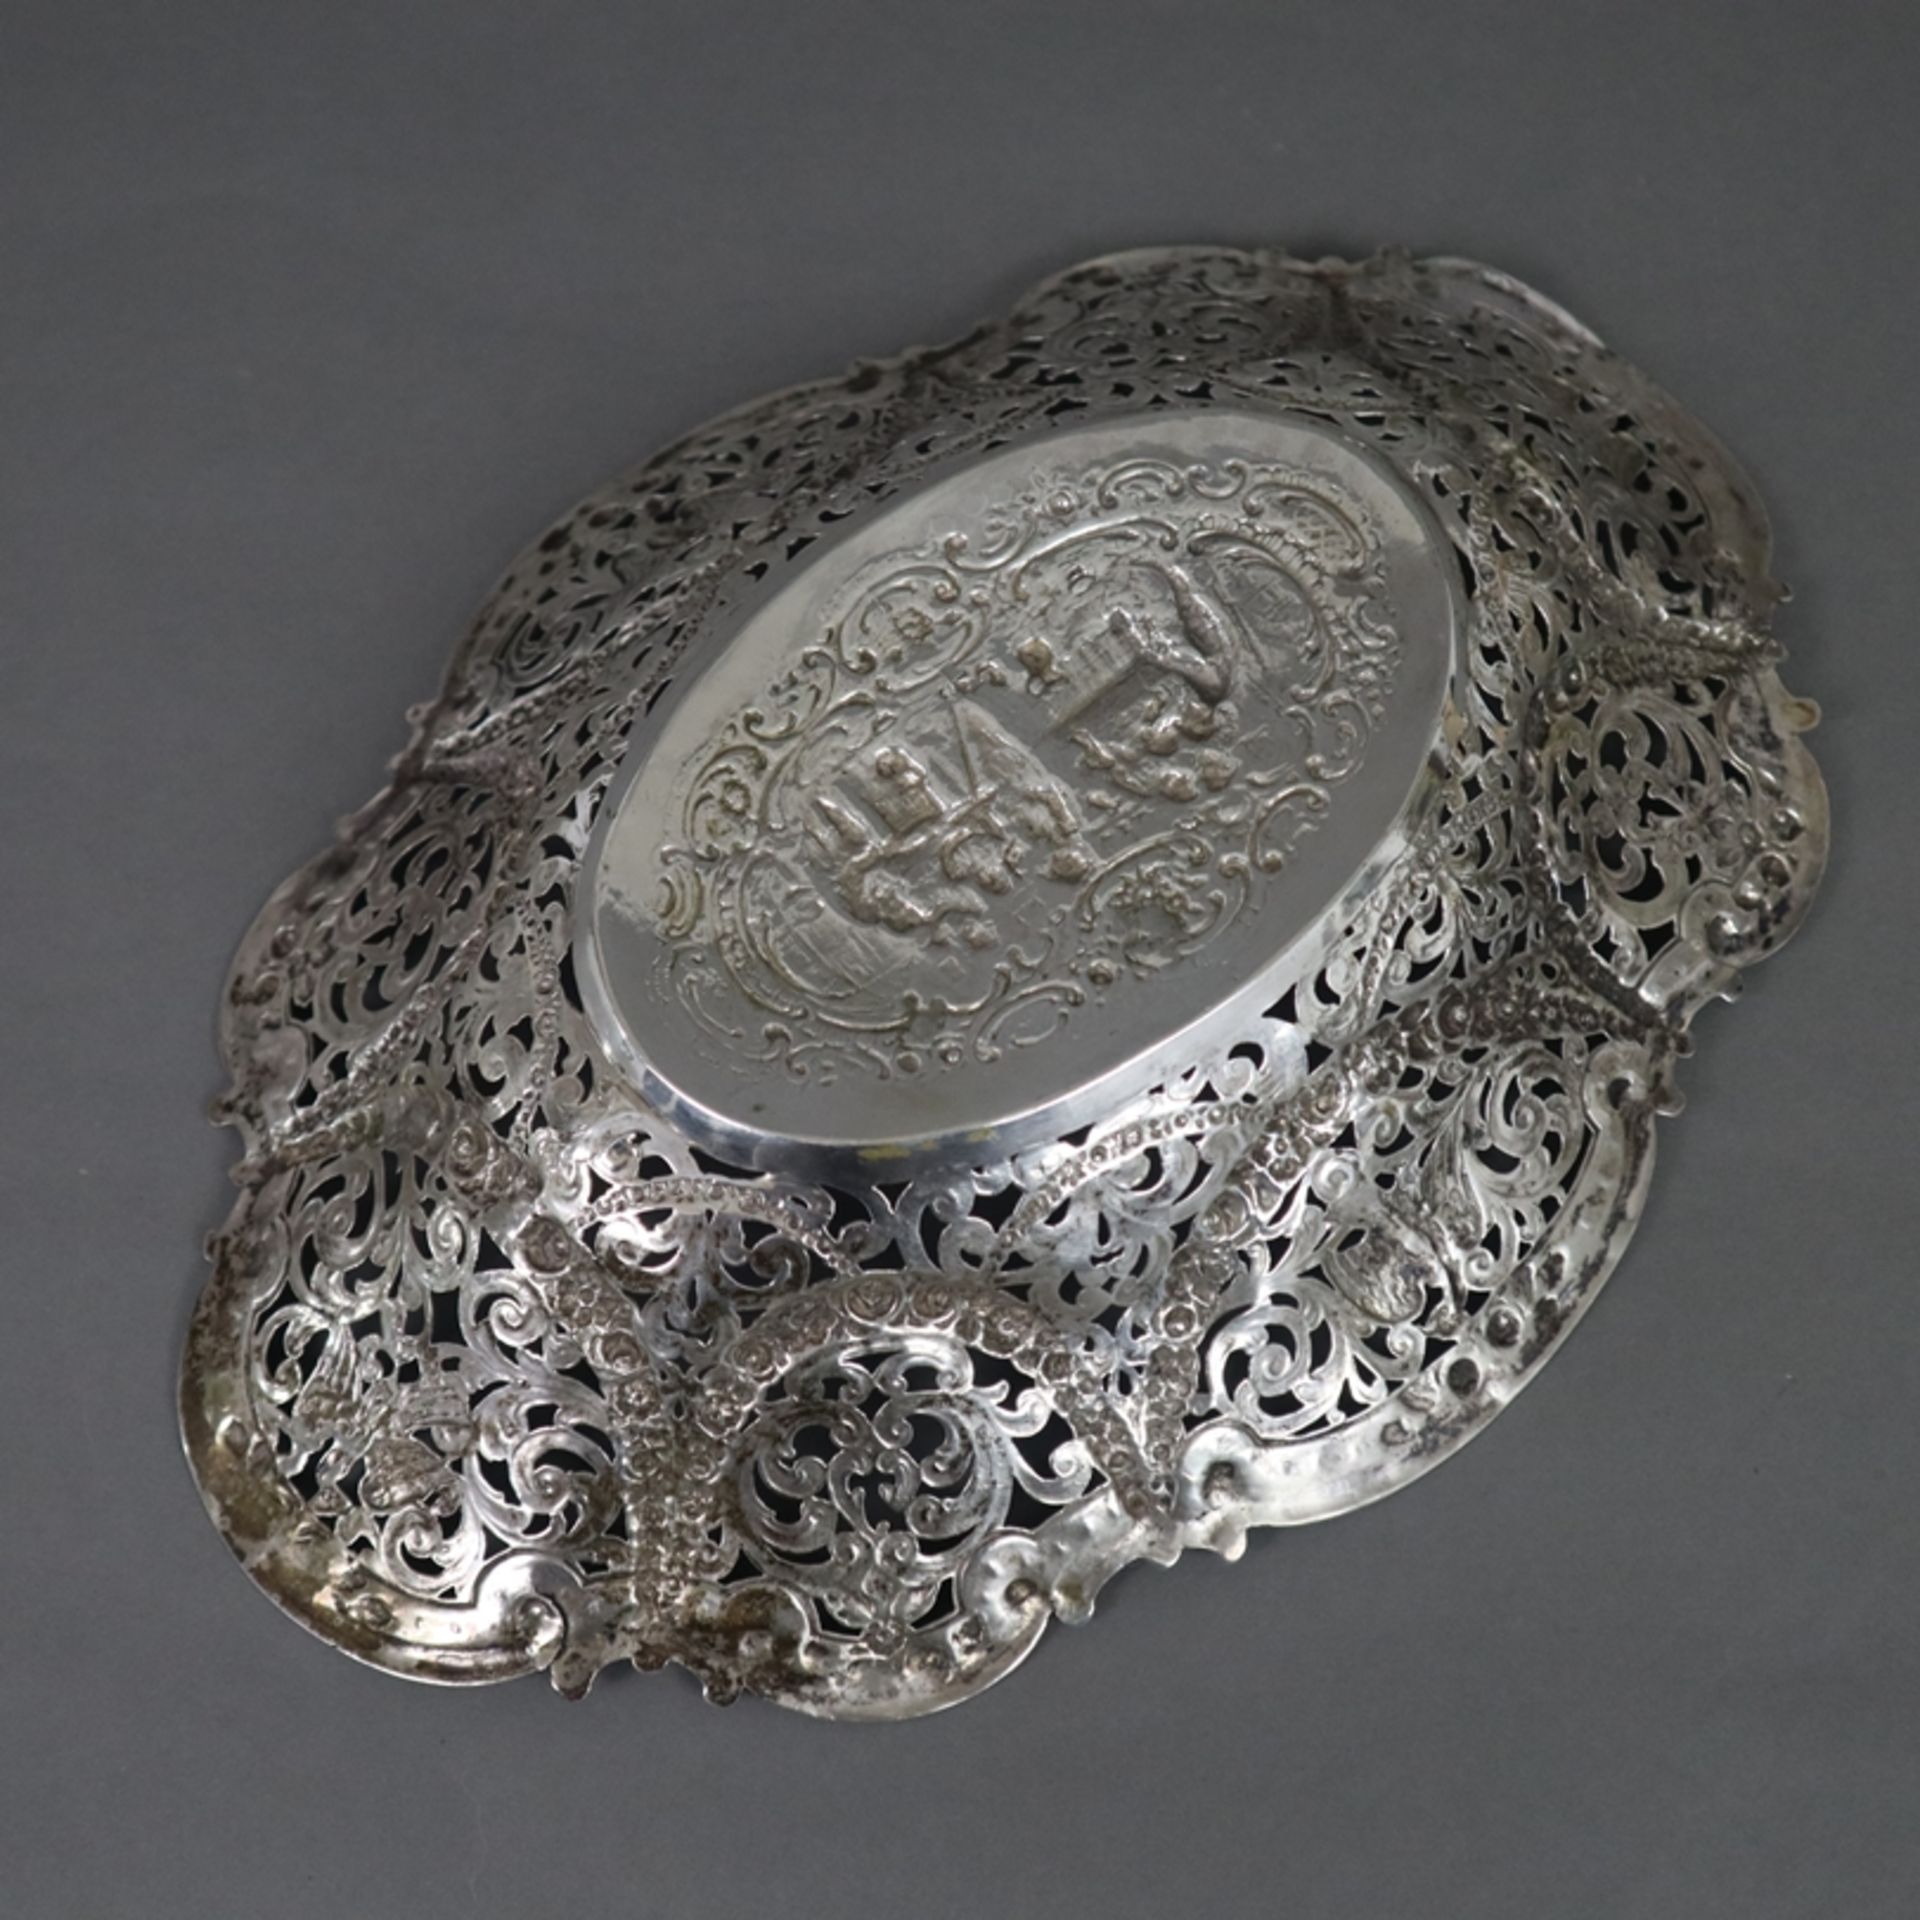 Üppig dekorierte Korbschale - deutsch, Silber 800/000, gestempelt, oval, geschweifte filigran durch - Bild 10 aus 10